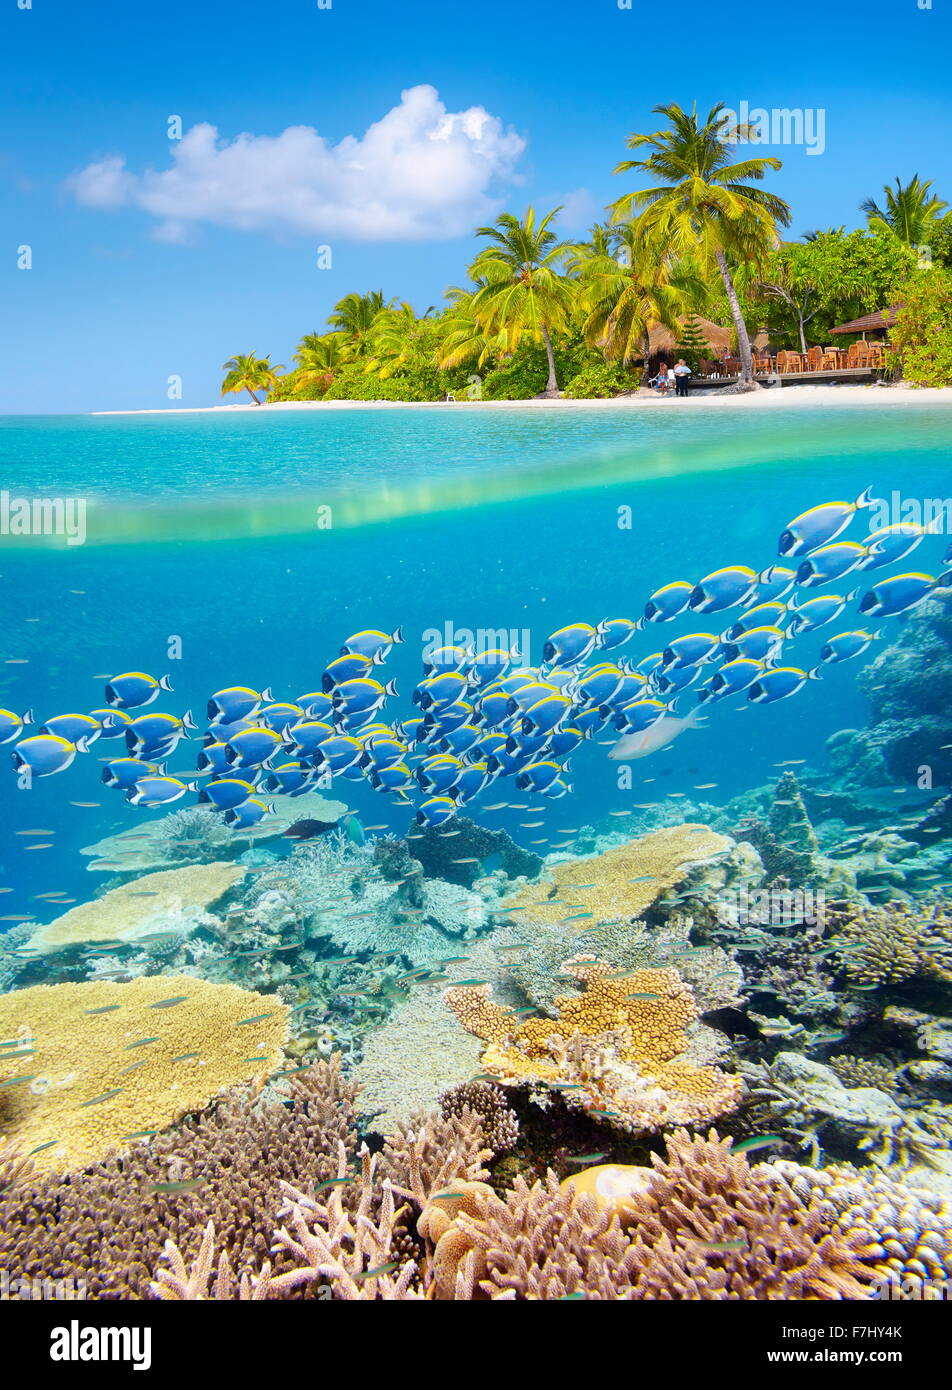 Maldivas isla tropical - vista submarina con arrecife Foto de stock